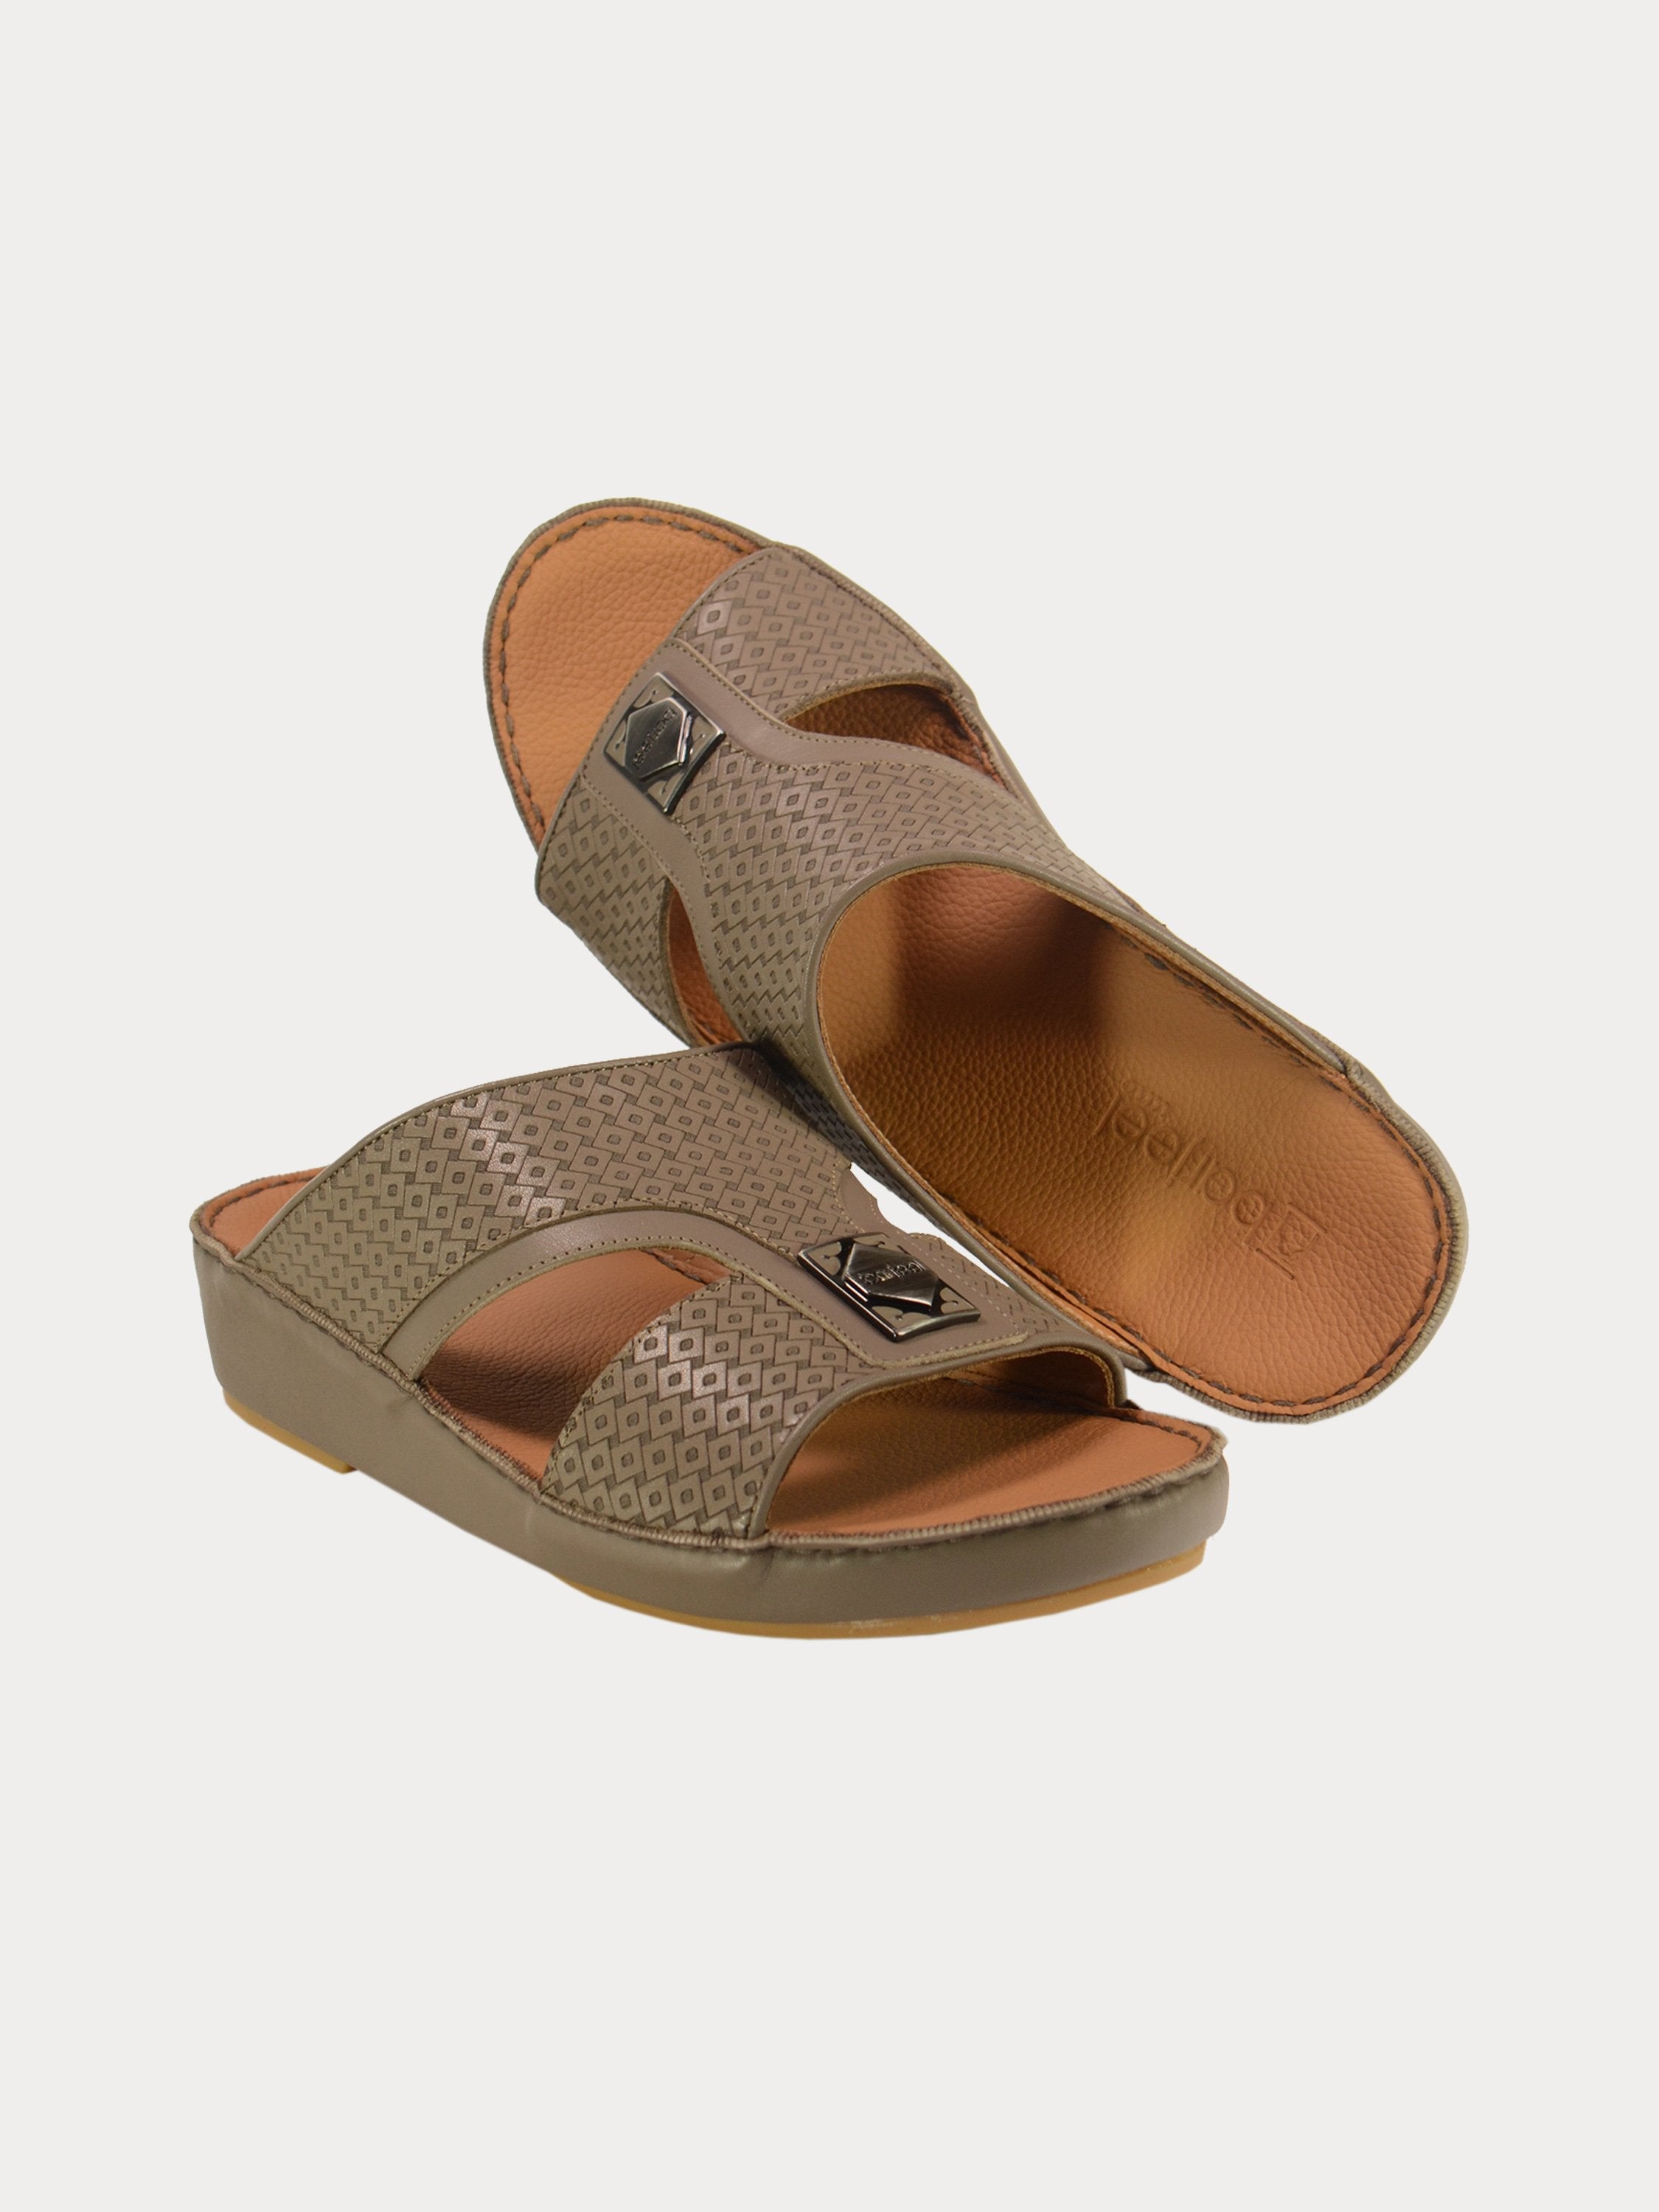 Barjeel Uno 001928 Square Textured Arabic Leather Sandals #color_Beige